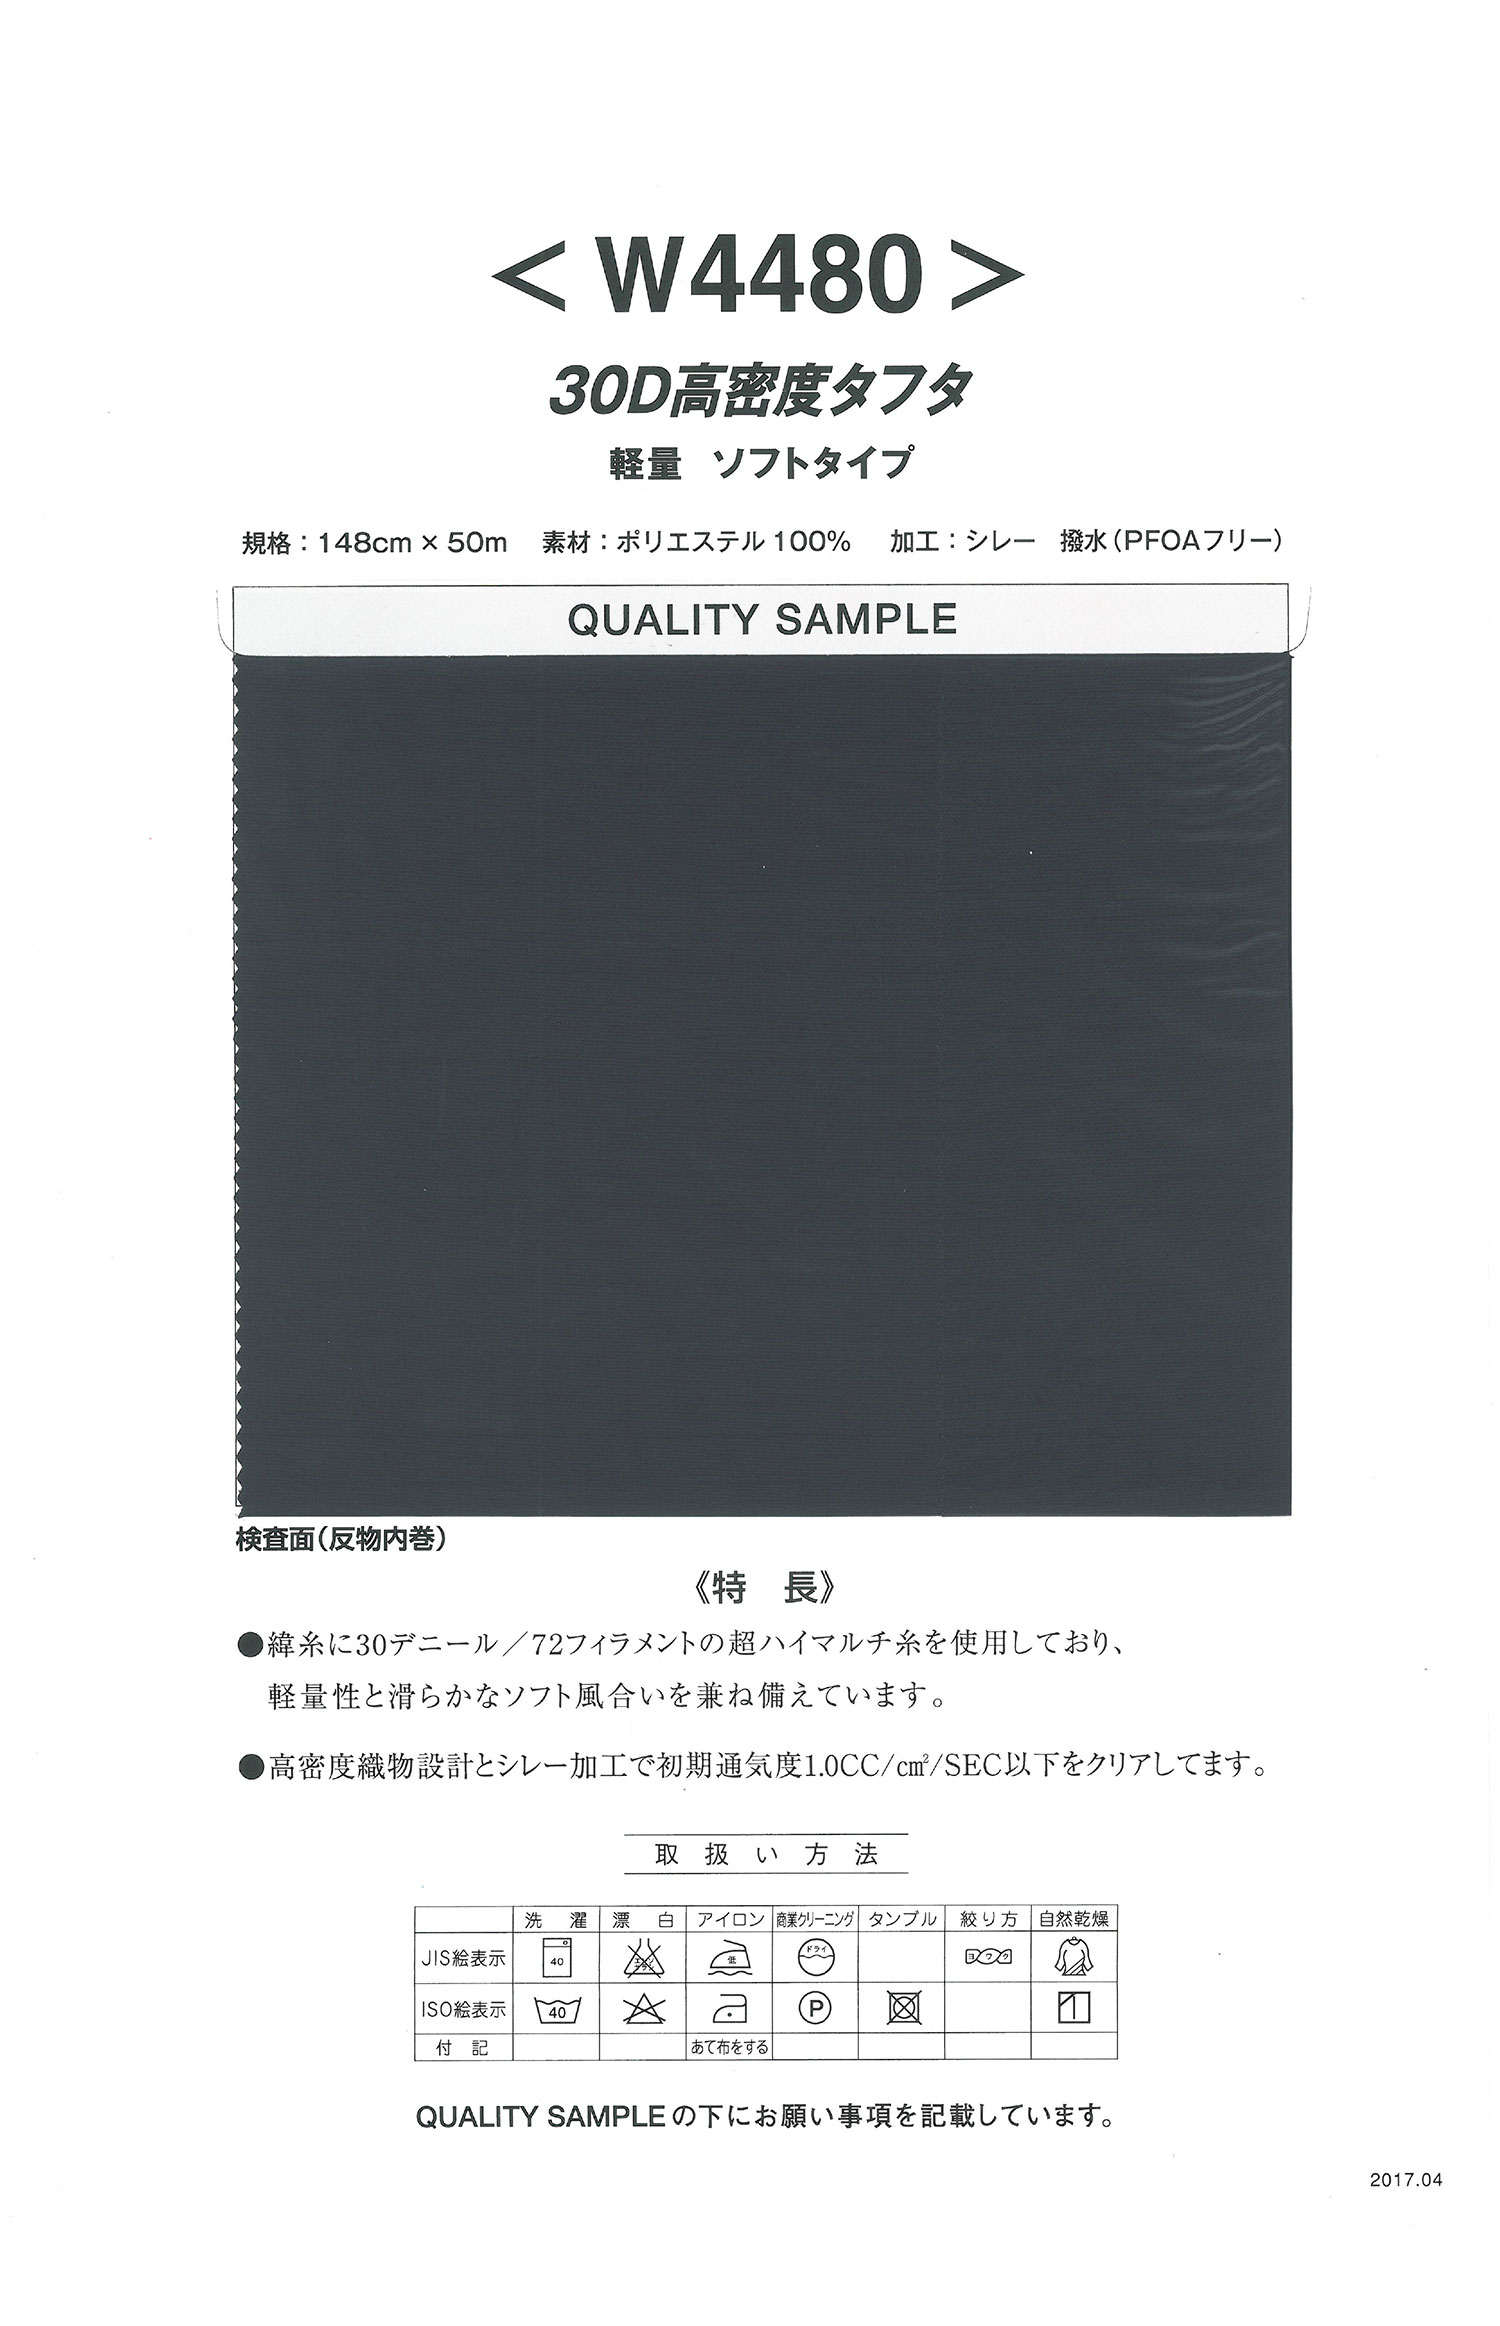 W4480 30D High Density Taffeta Lightweight Soft Type[Textile / Fabric] Nishiyama